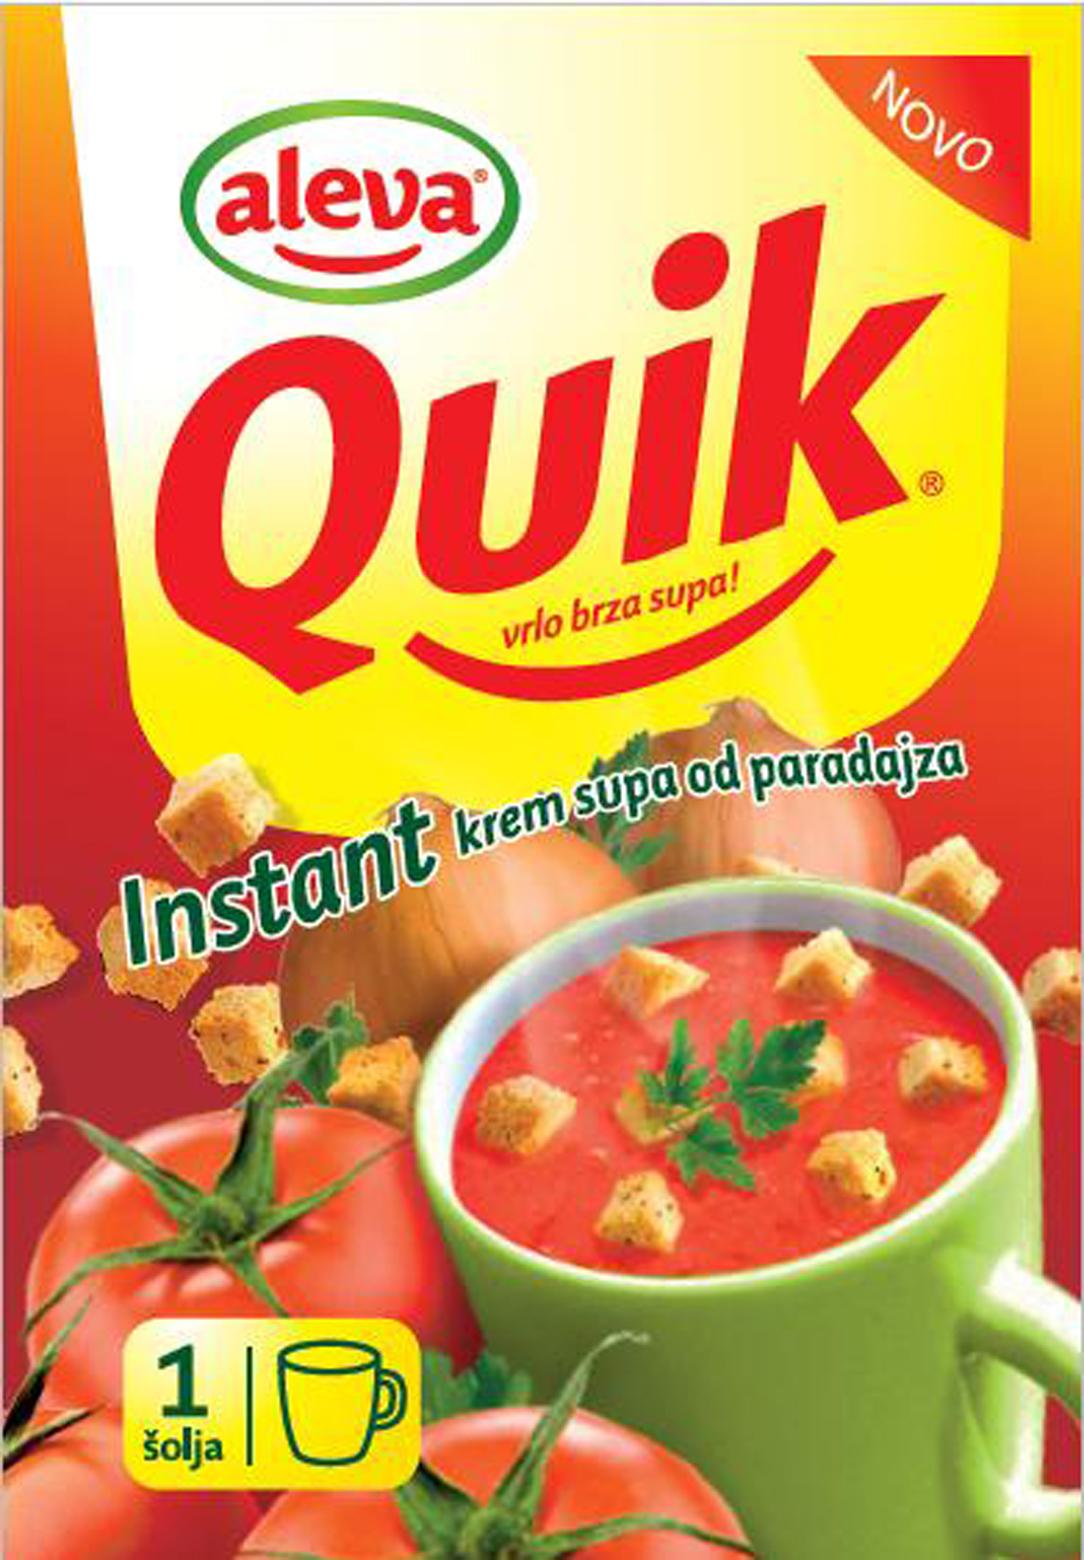 Slika za Instant krem supa paradajz Quick 18g